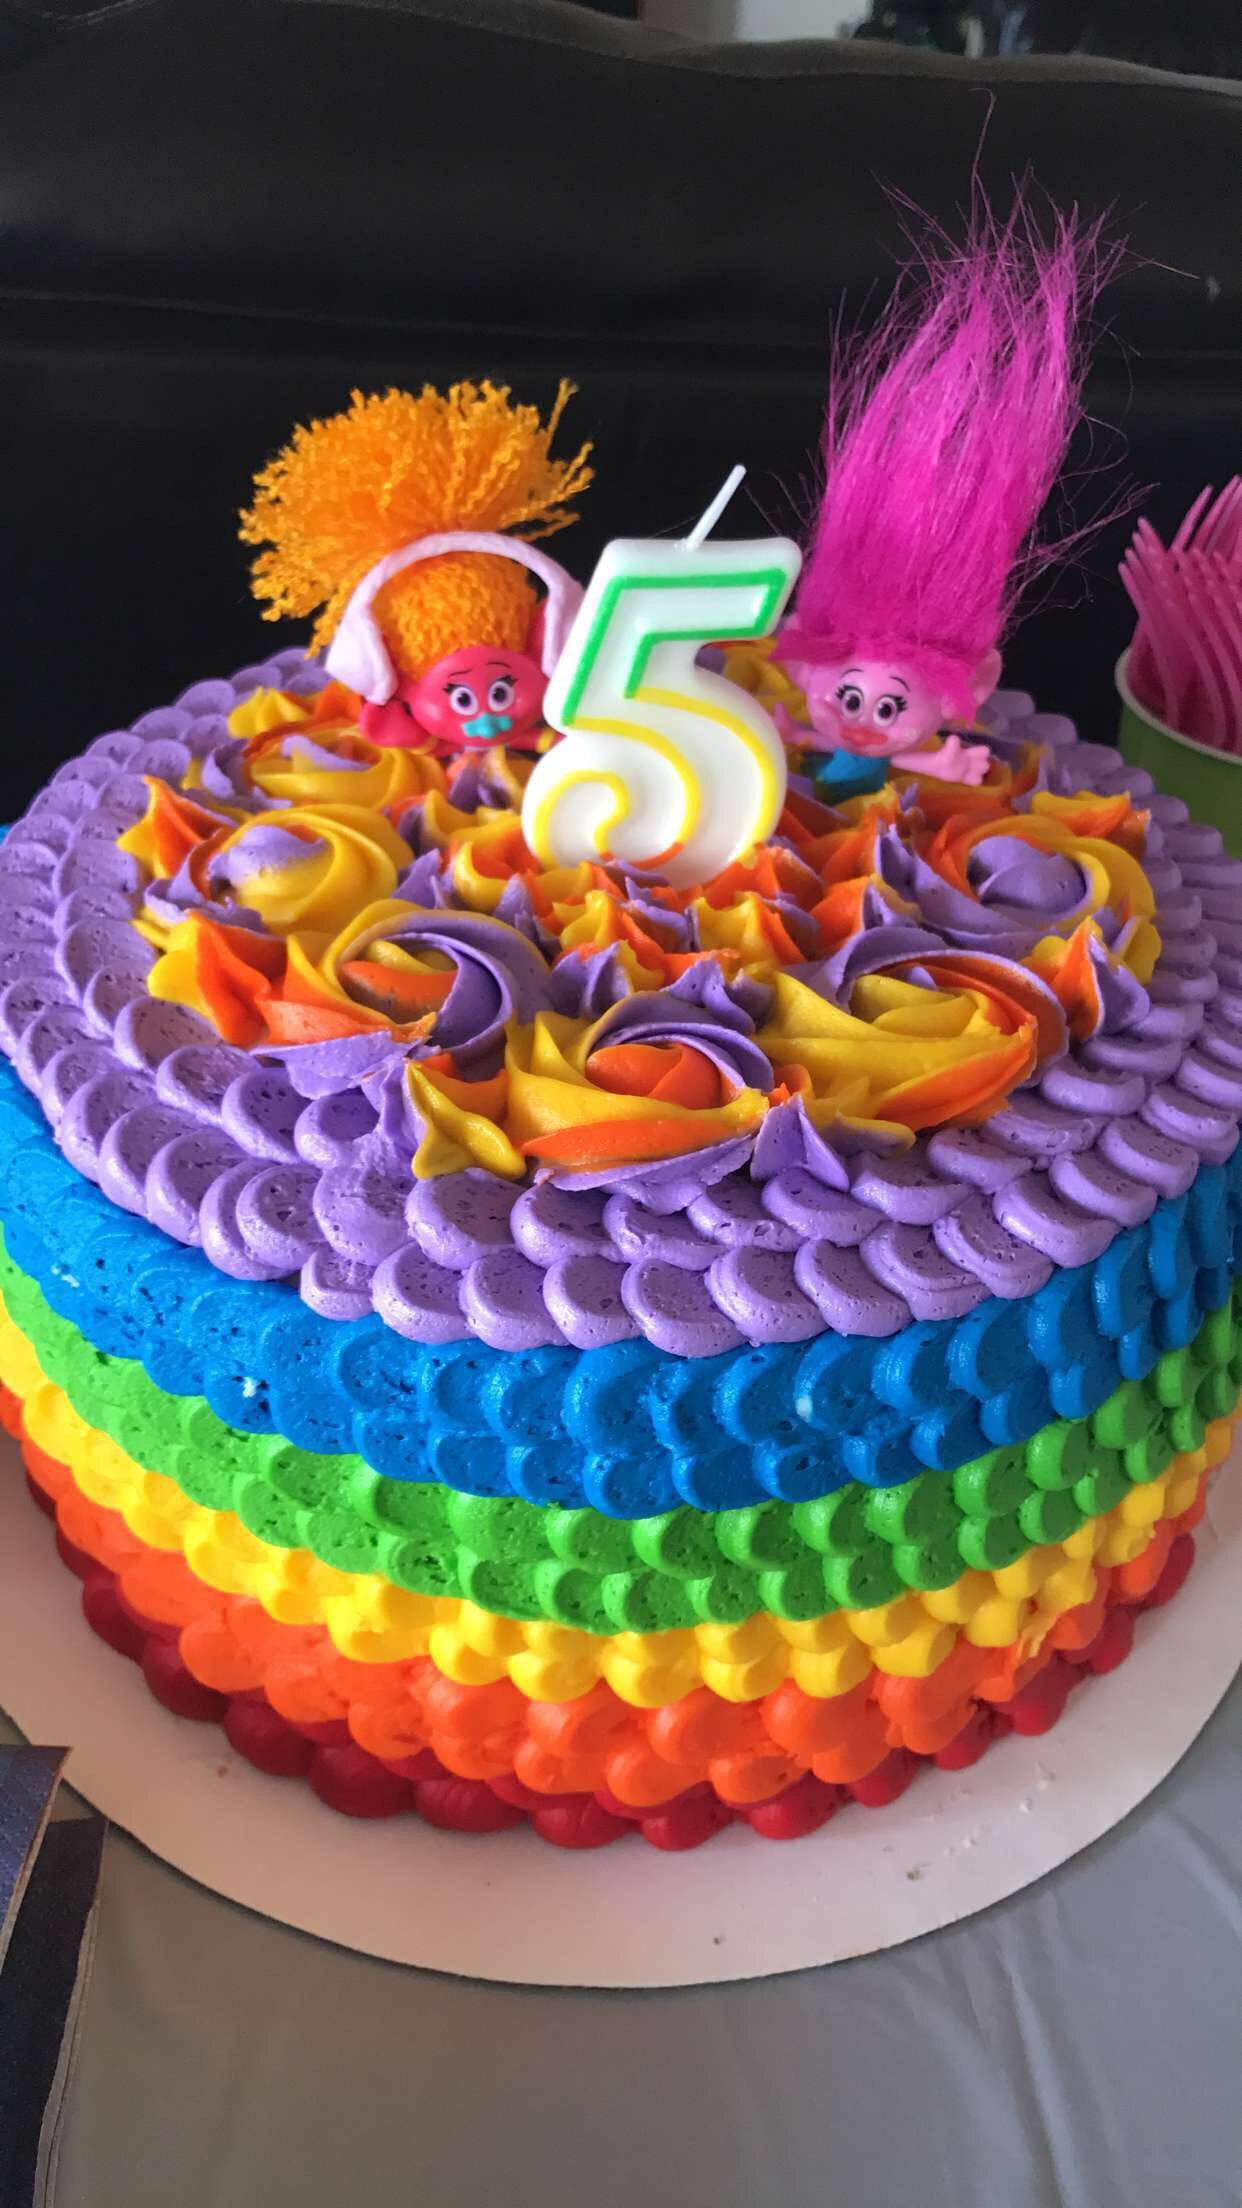 Best ideas about Trolls Birthday Cake Ideas
. Save or Pin Trolls birthday cake 2017 bday ideas Now.